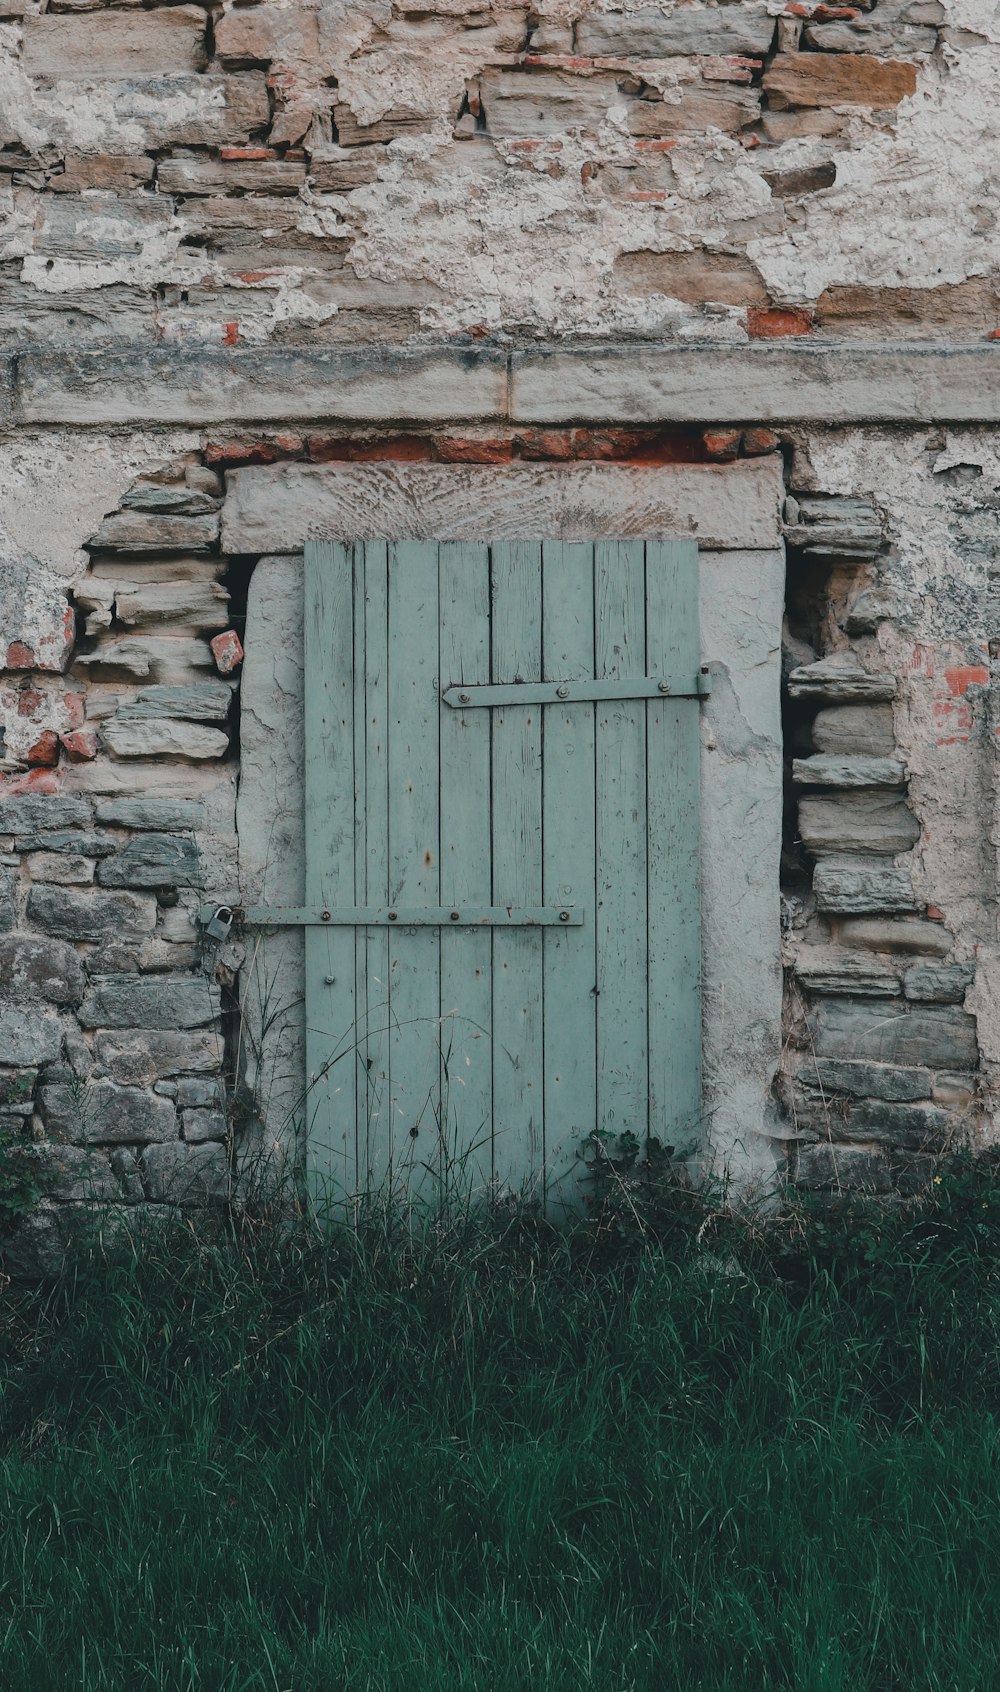 a door in a stone building